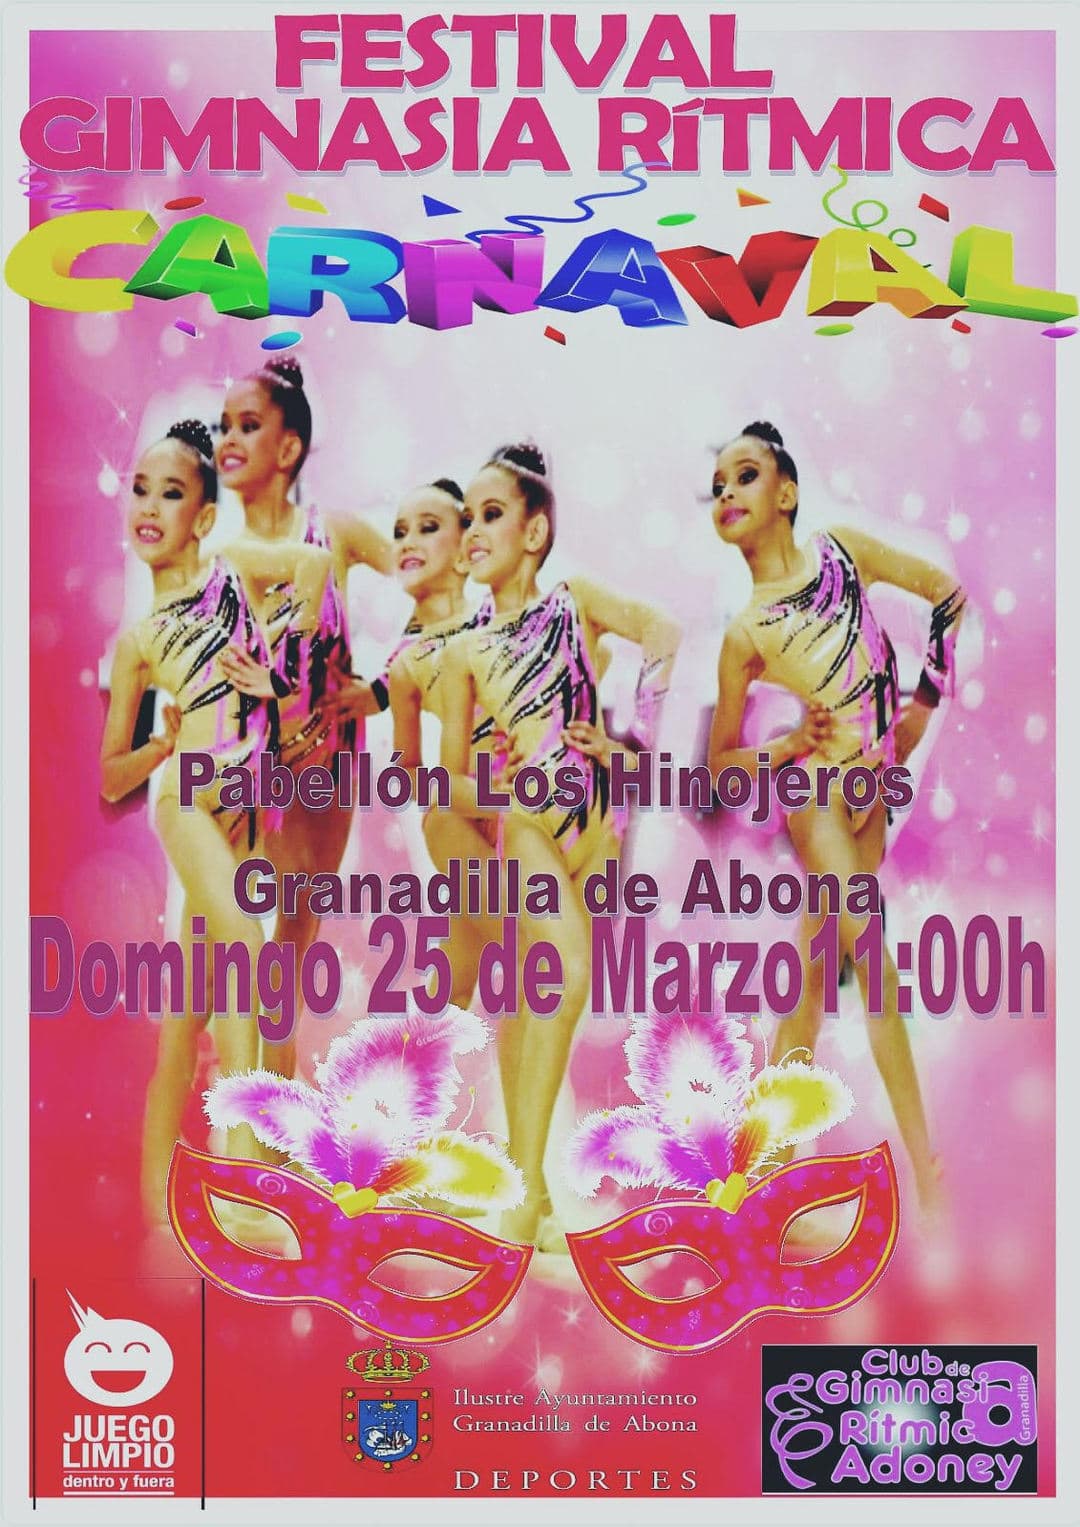 ‘Festival de Carnaval de Gimnasia Rítmica’, este domingo en el Pabellón Municipal de Deportes